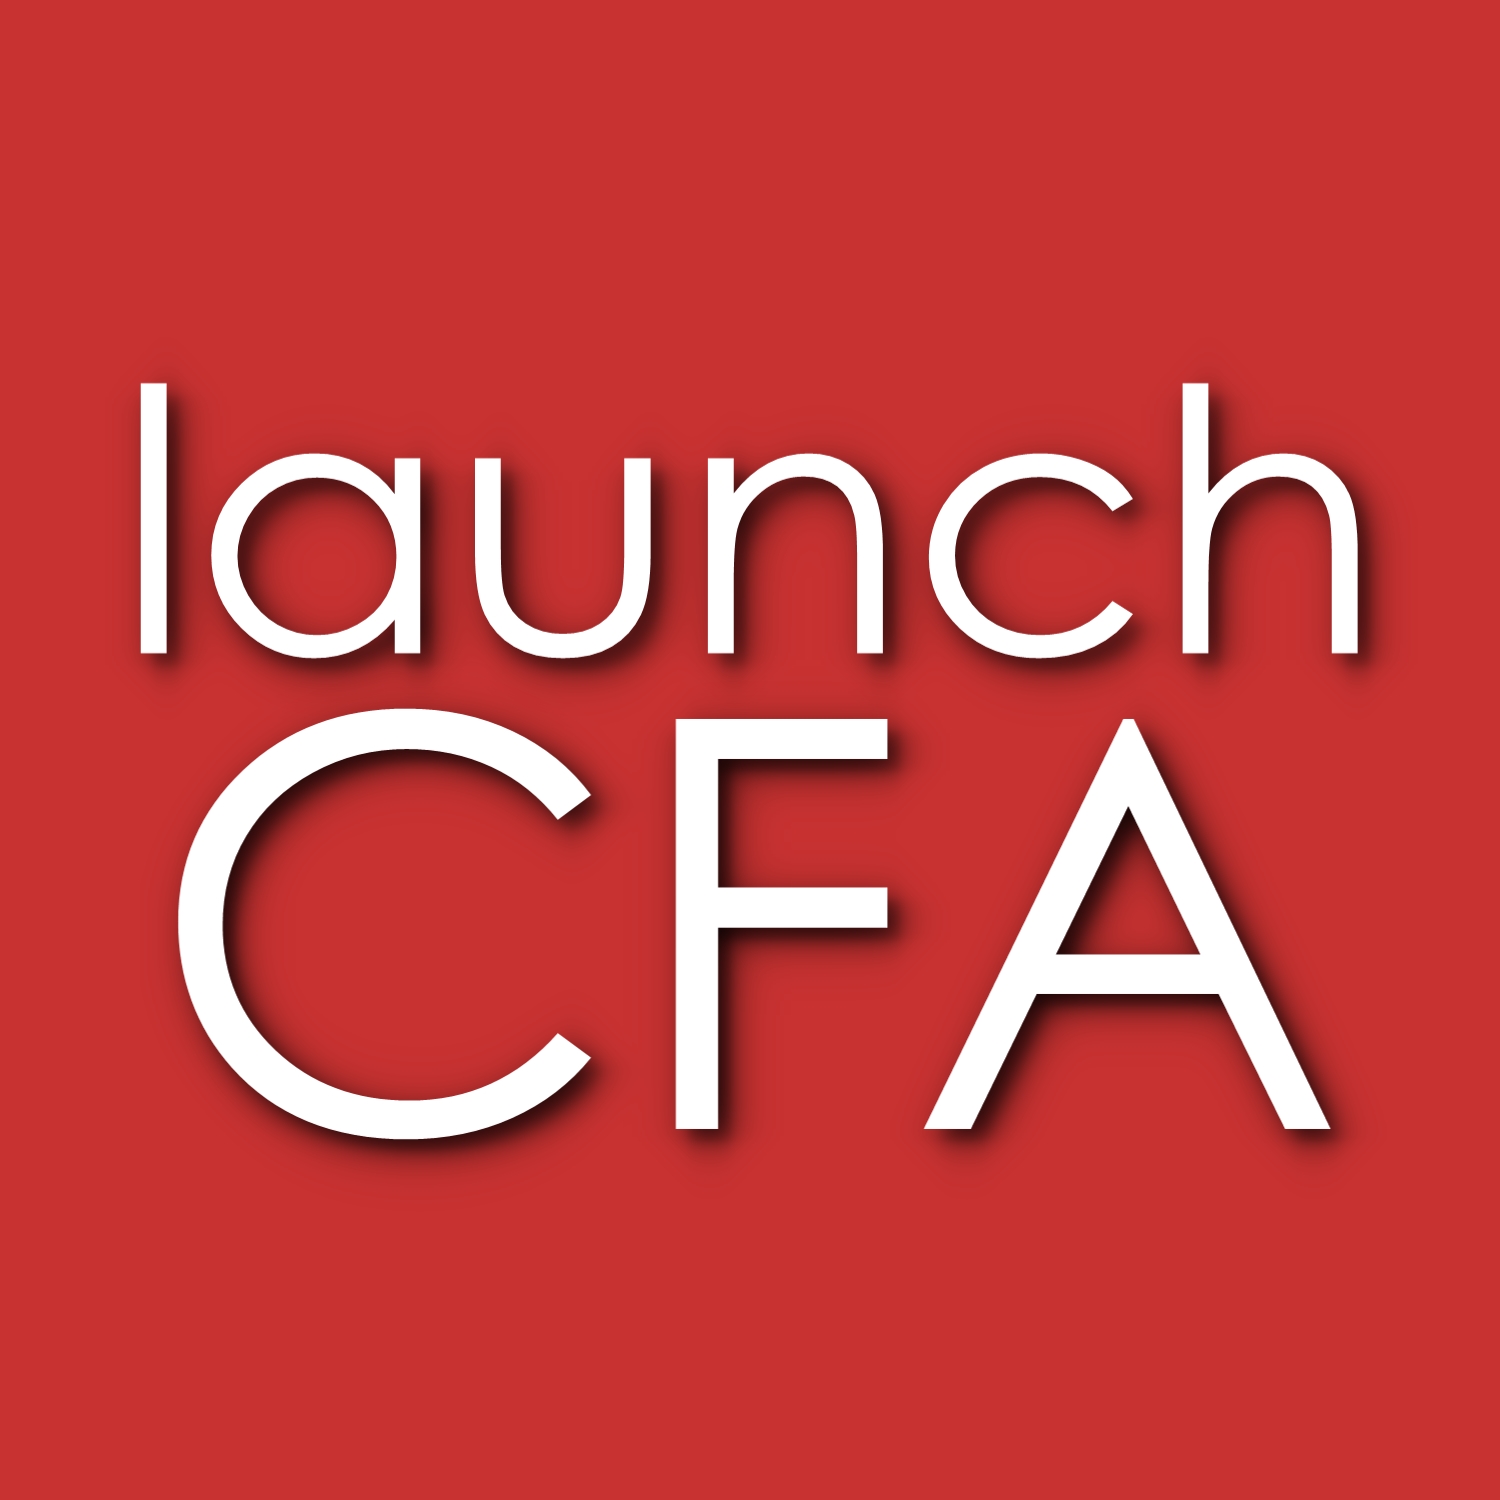 launch CFA